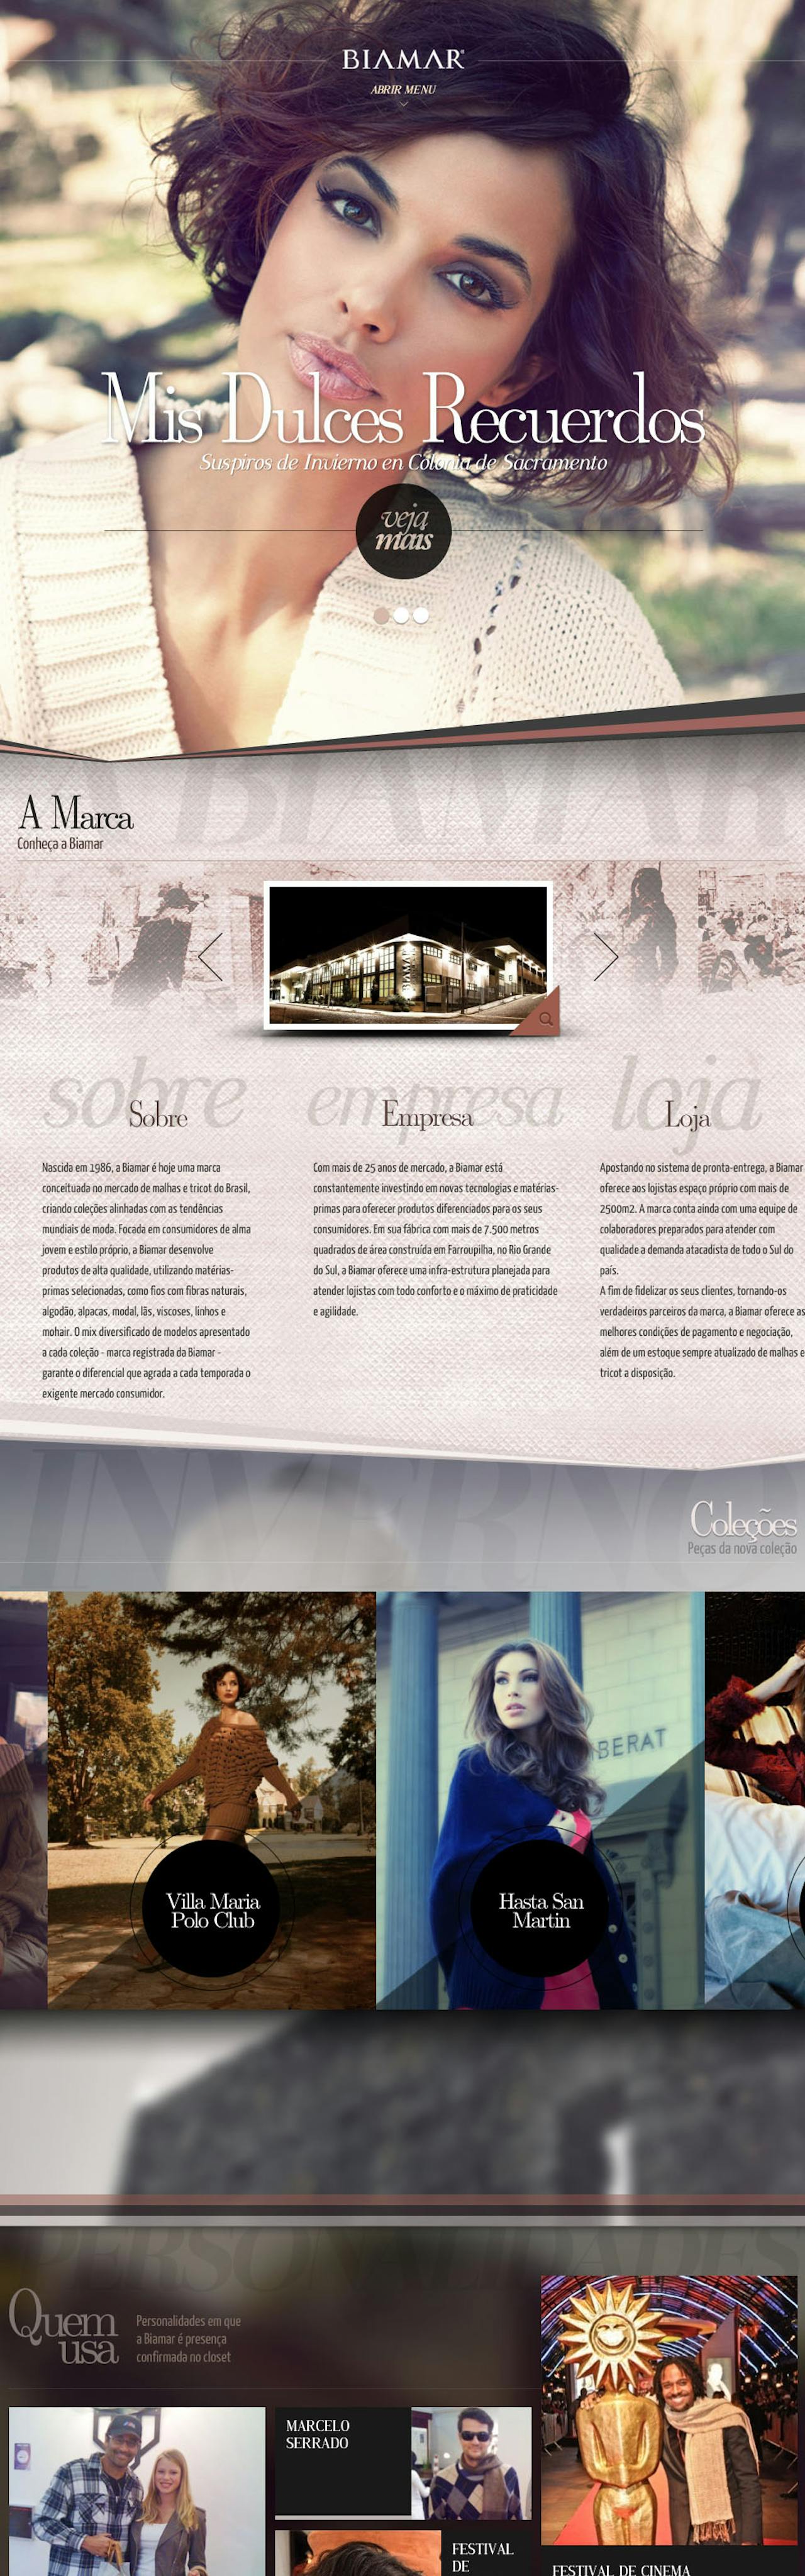 Biamar – Inverno 2012 Website Screenshot